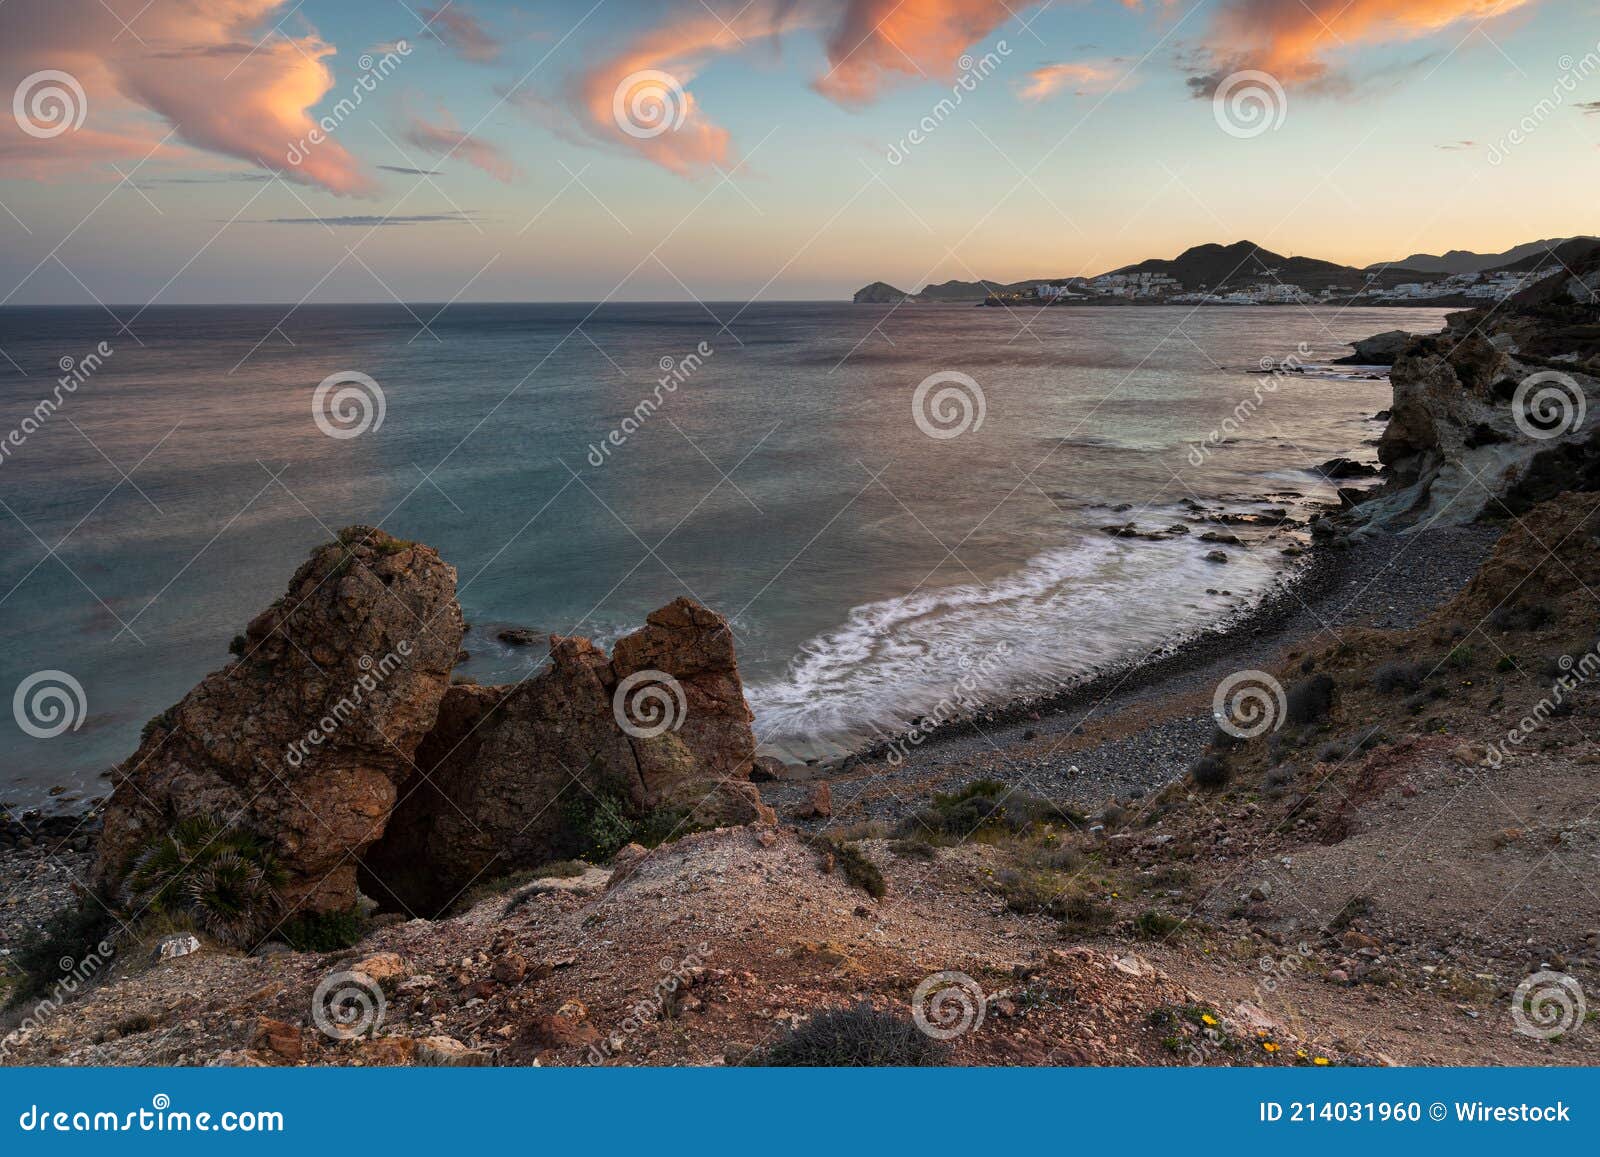 beautiful shot of the shore at cala higuera in spain